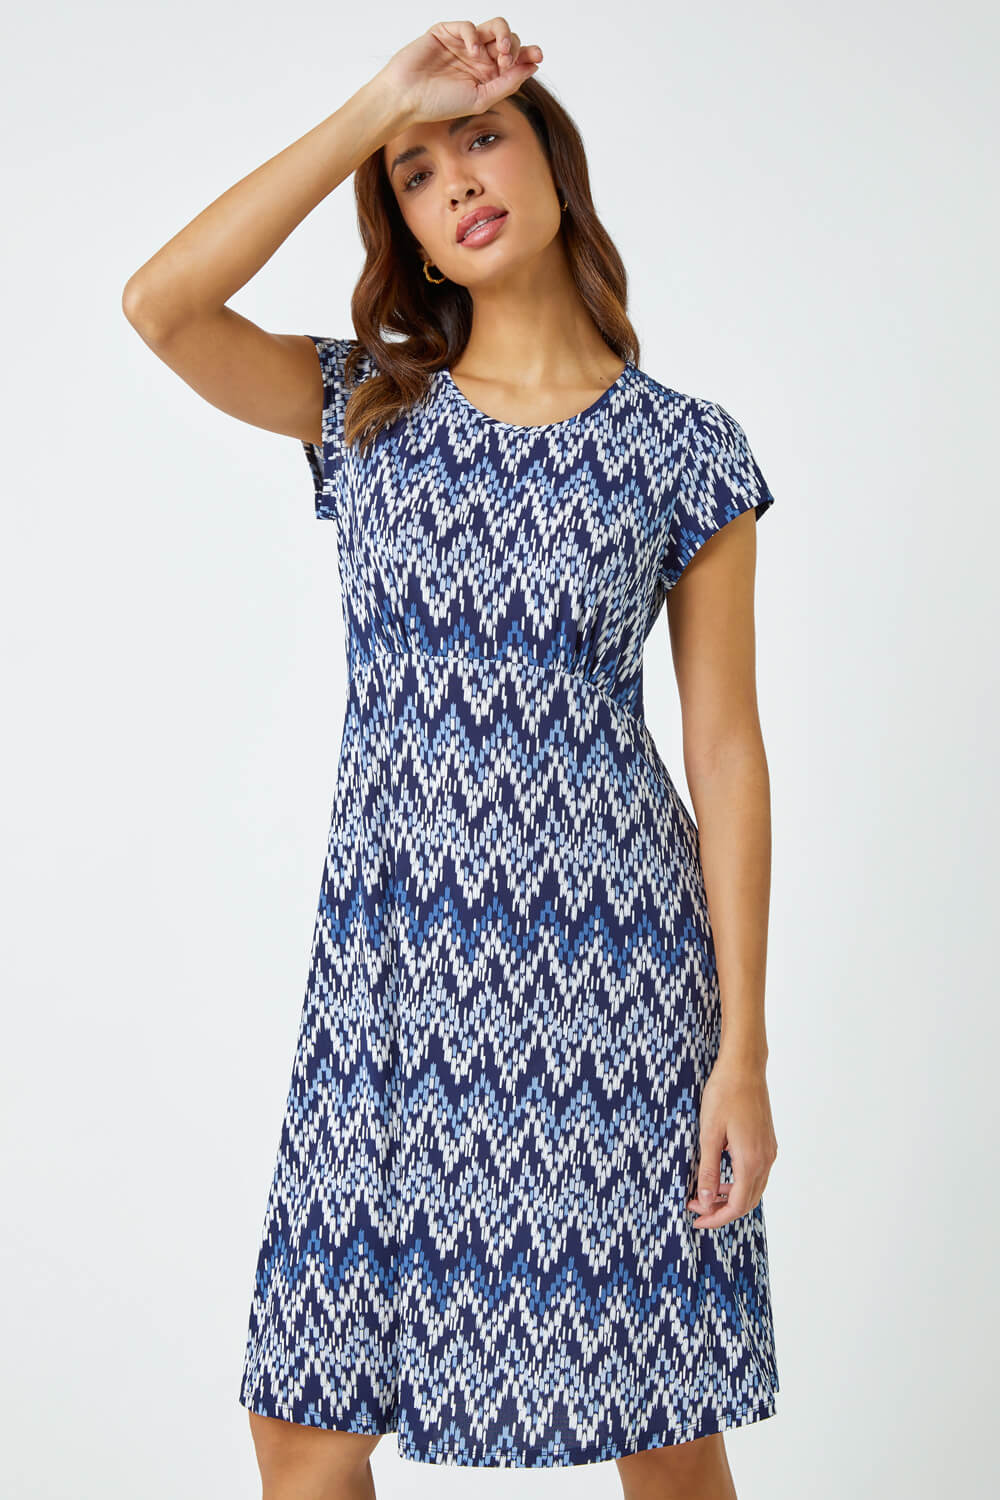 Blue Aztec Print Textured Stretch Dress, Image 1 of 5